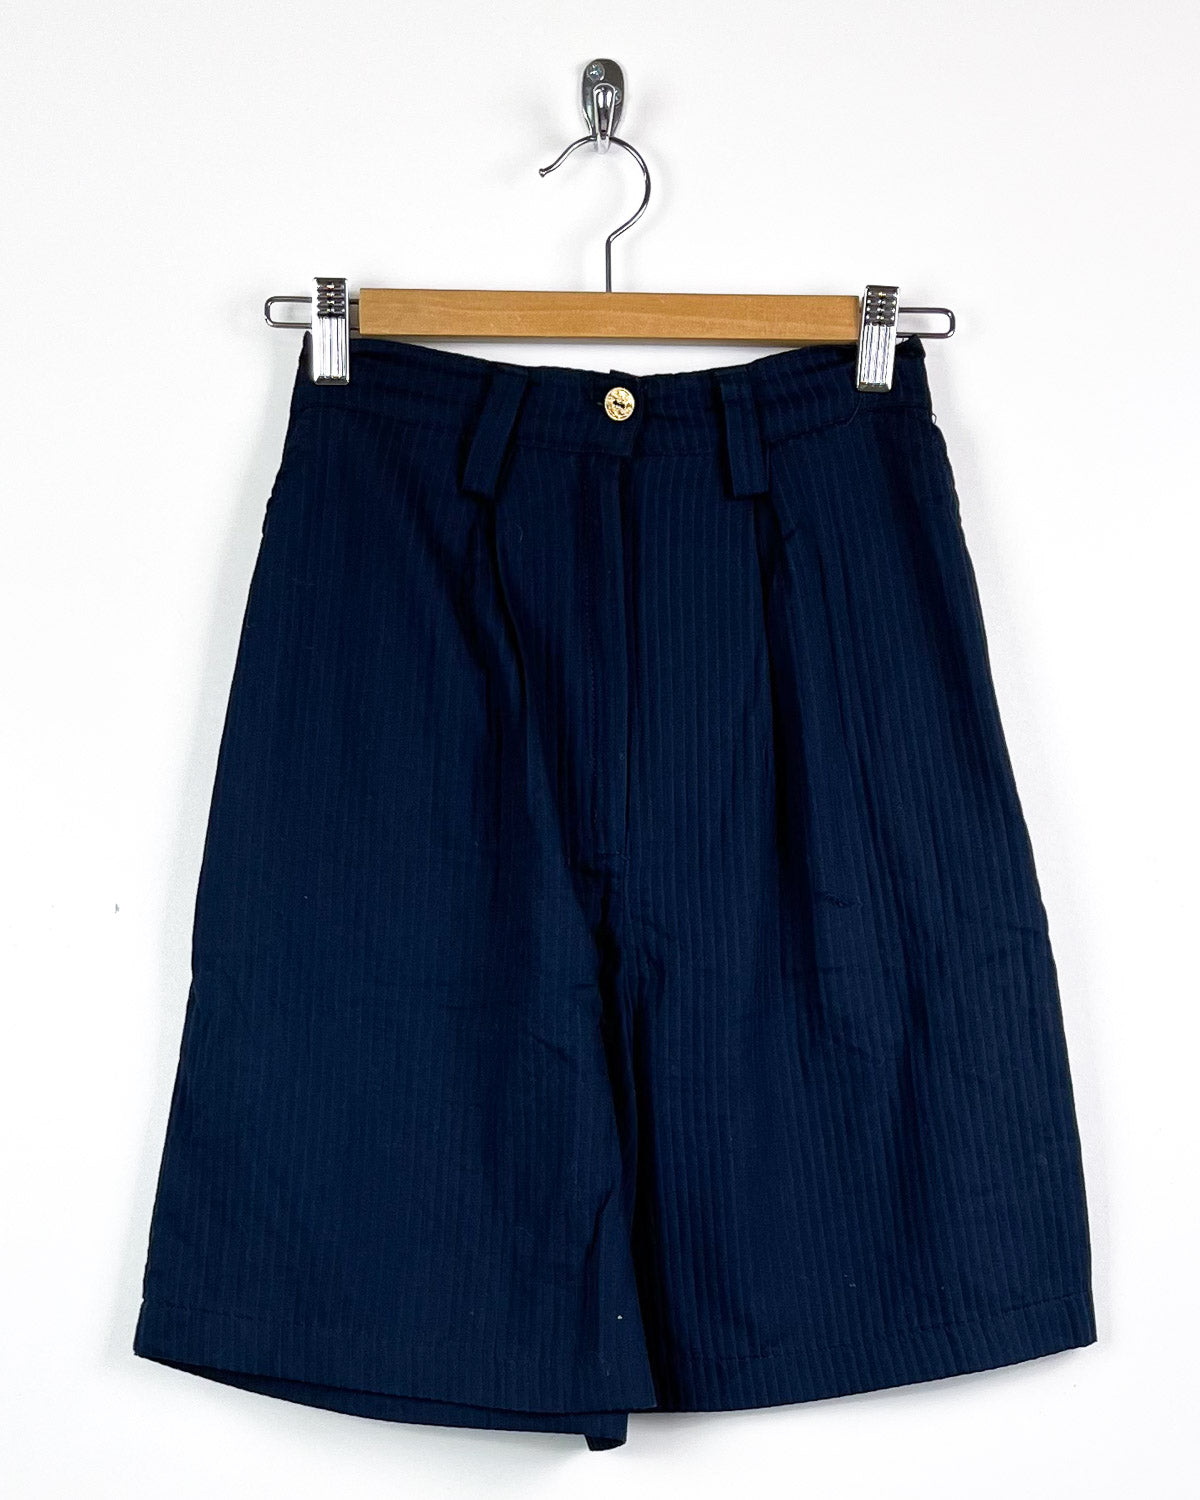 Shorts A Coste Vintage Taglia 38